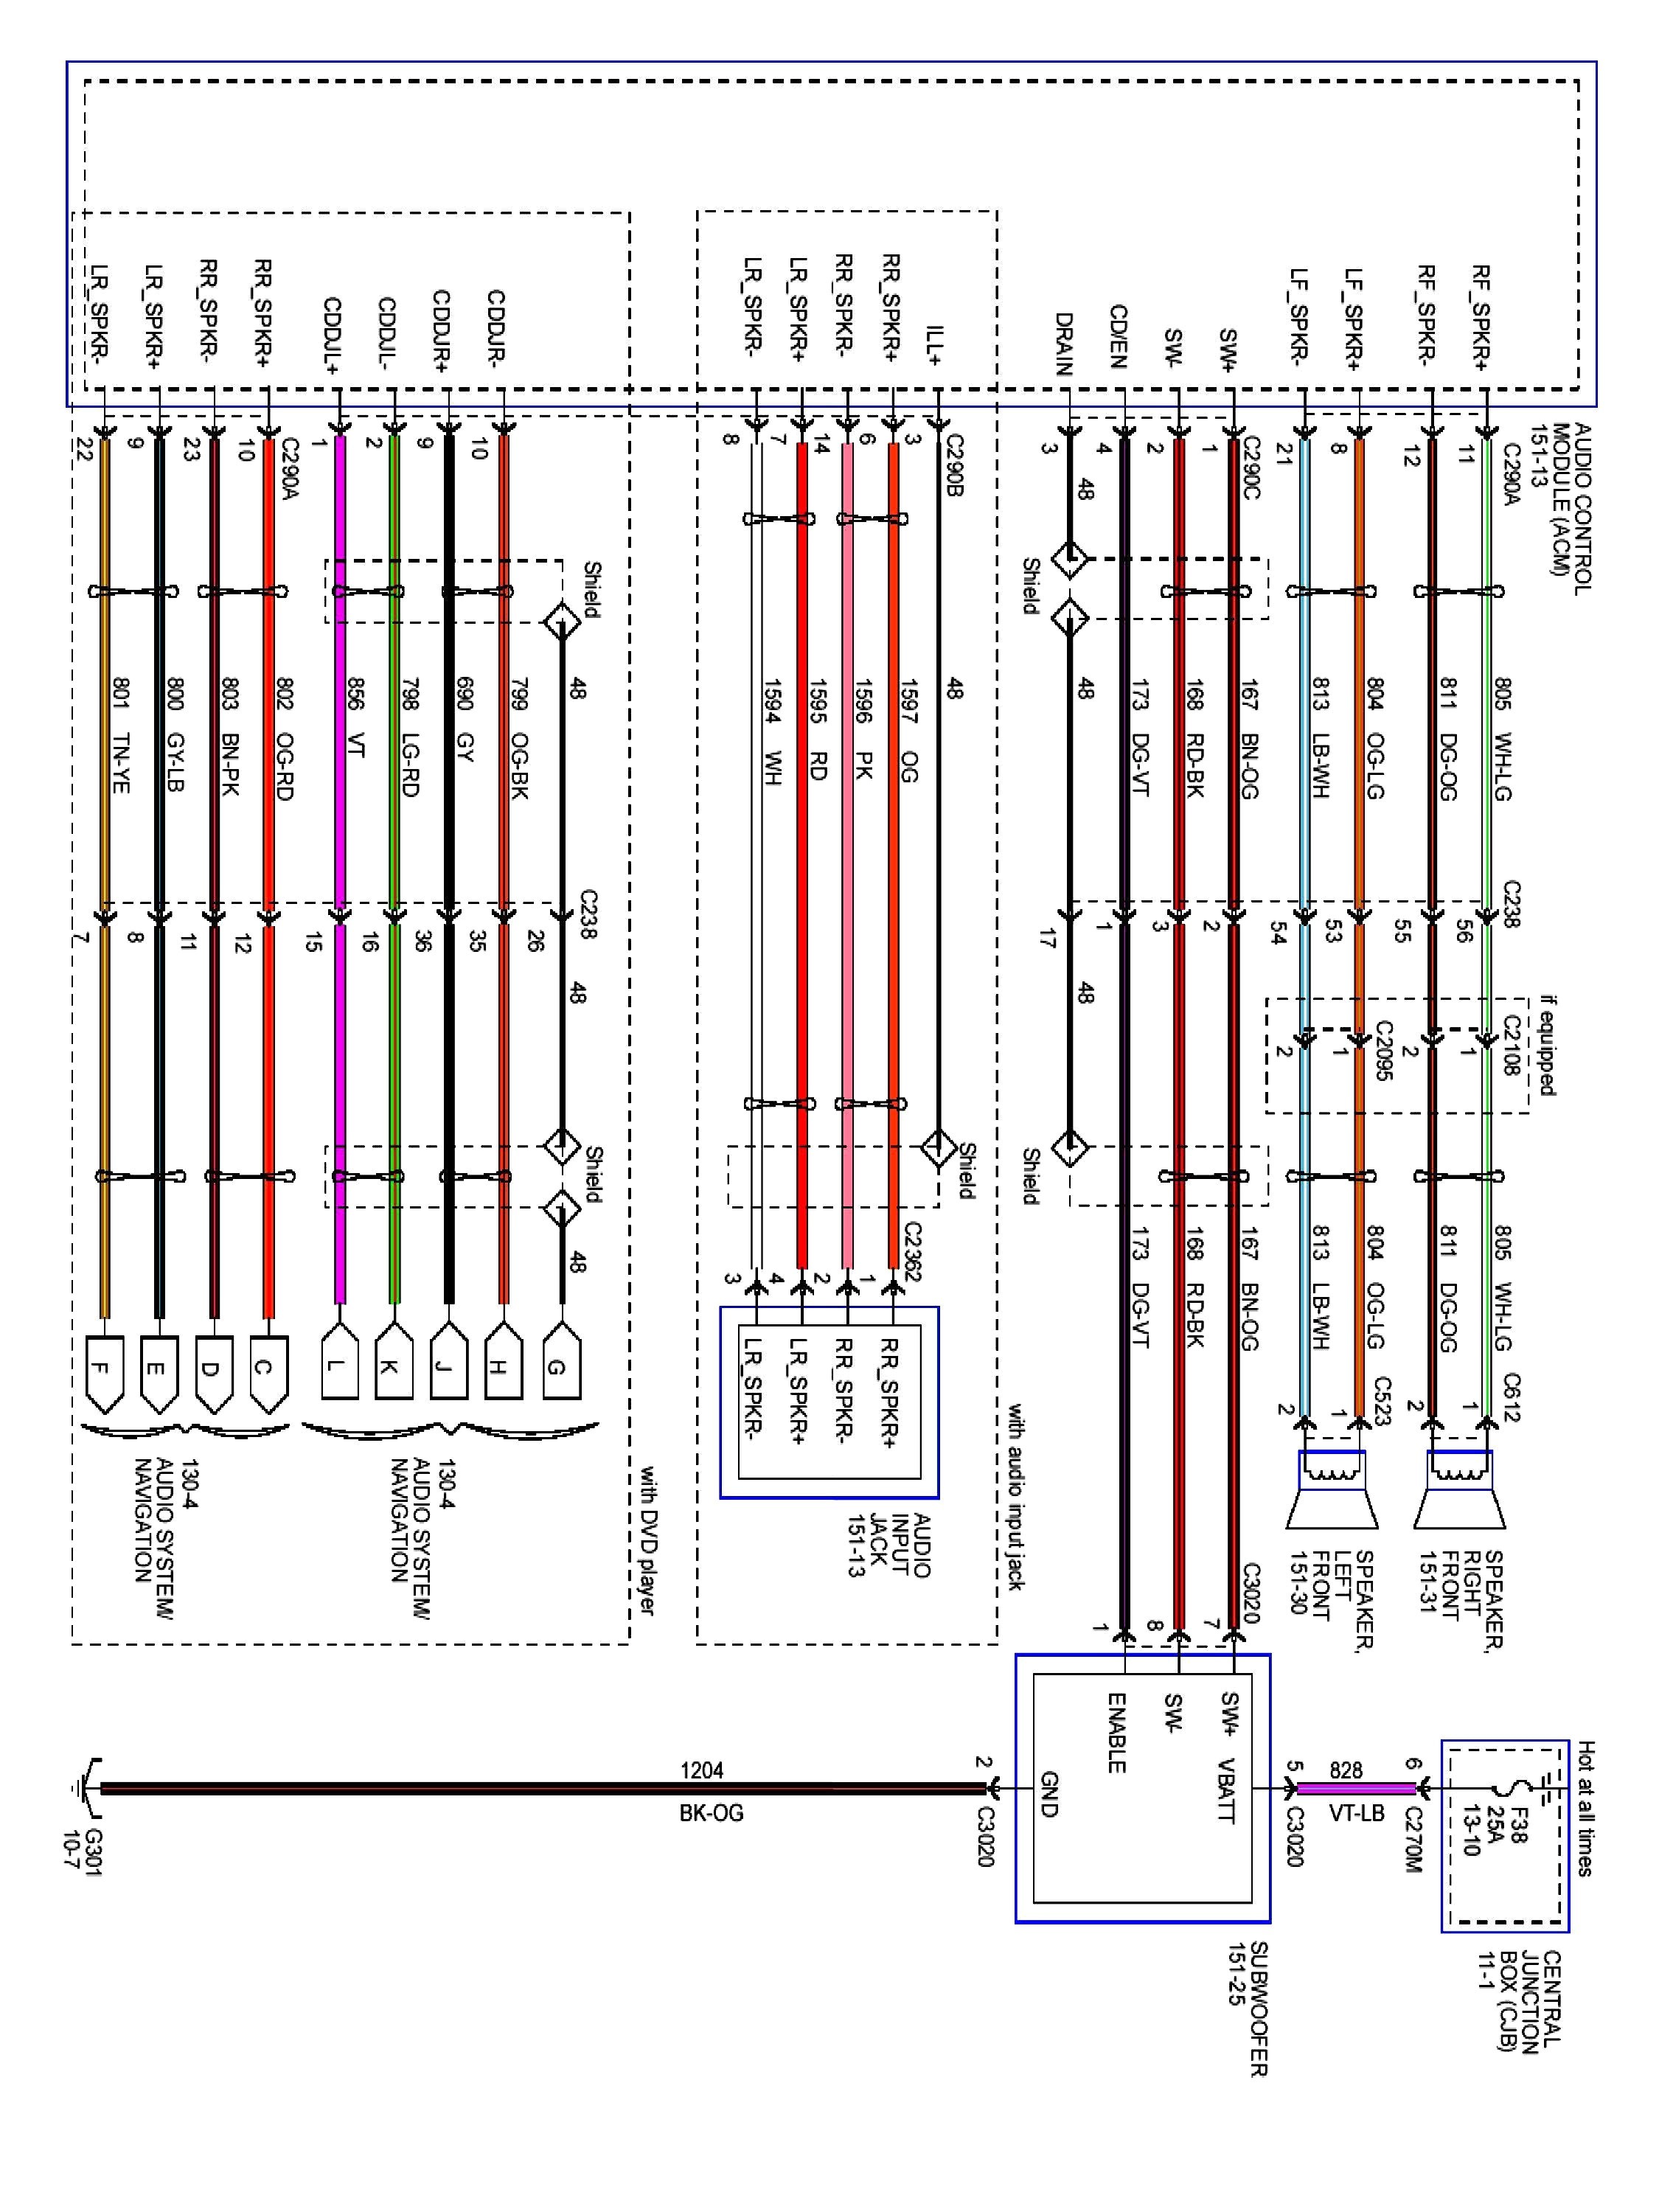 2001 ford F250 Radio Wiring Diagram Category Wiring Diagram 24 Of 2001 ford F250 Radio Wiring Diagram